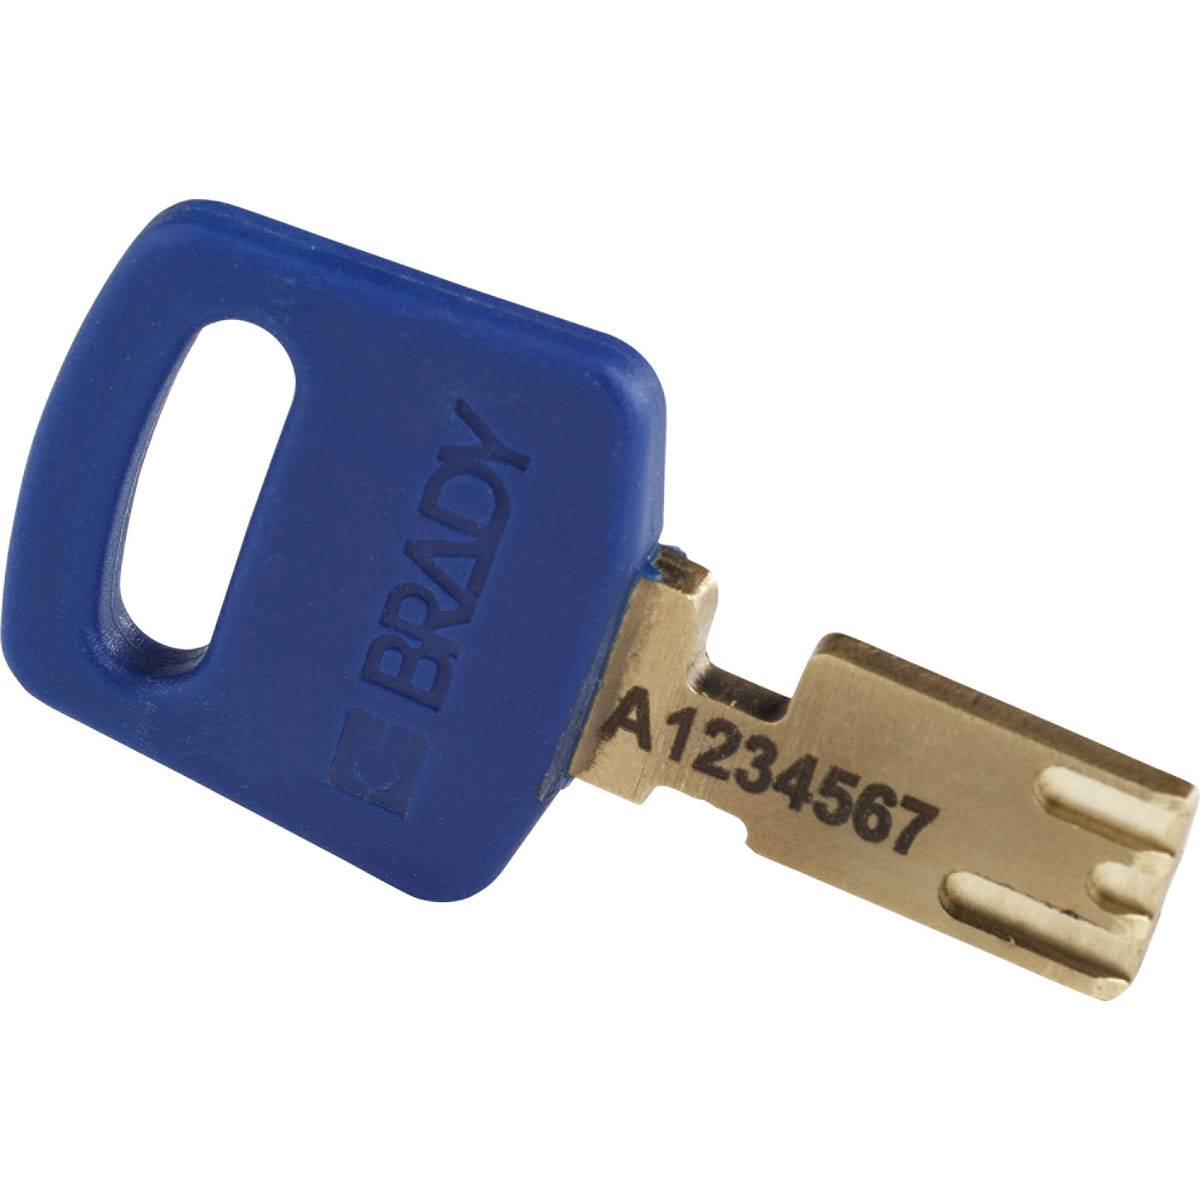 Brady® NYL-BLU-38PL-KD SafeKey Standard Lockout Padlock, Different Key, Blue, LOTO-101 Nylon Body, 1/4 in Dia x 1-1/2 in H x 0.8 in W Plastic Shackle, 3/4 in L Body, Non-Conductive Conductivity